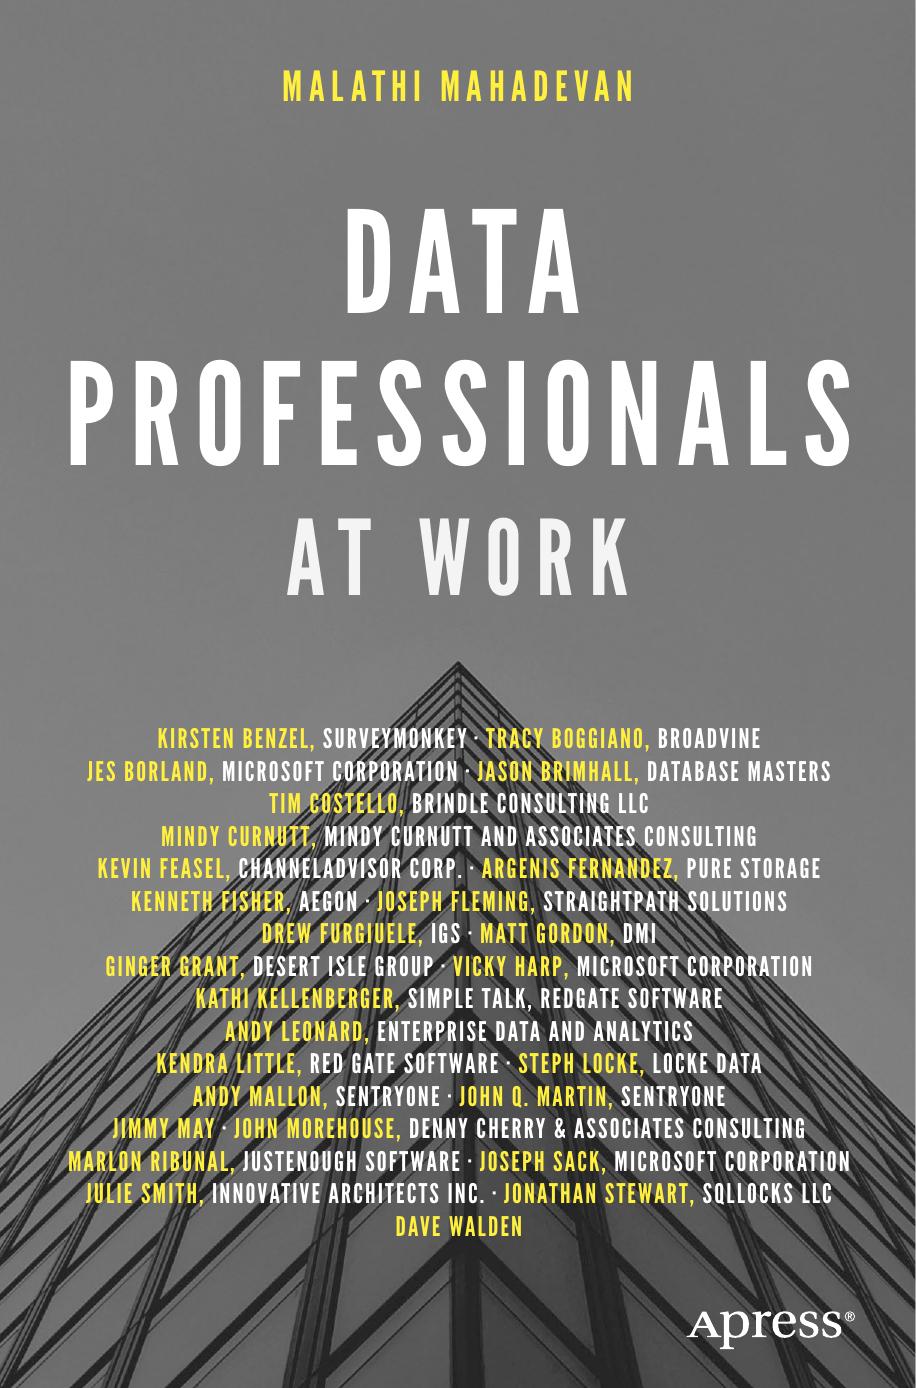 Data Professionals at Work by Malathi Mahadevan